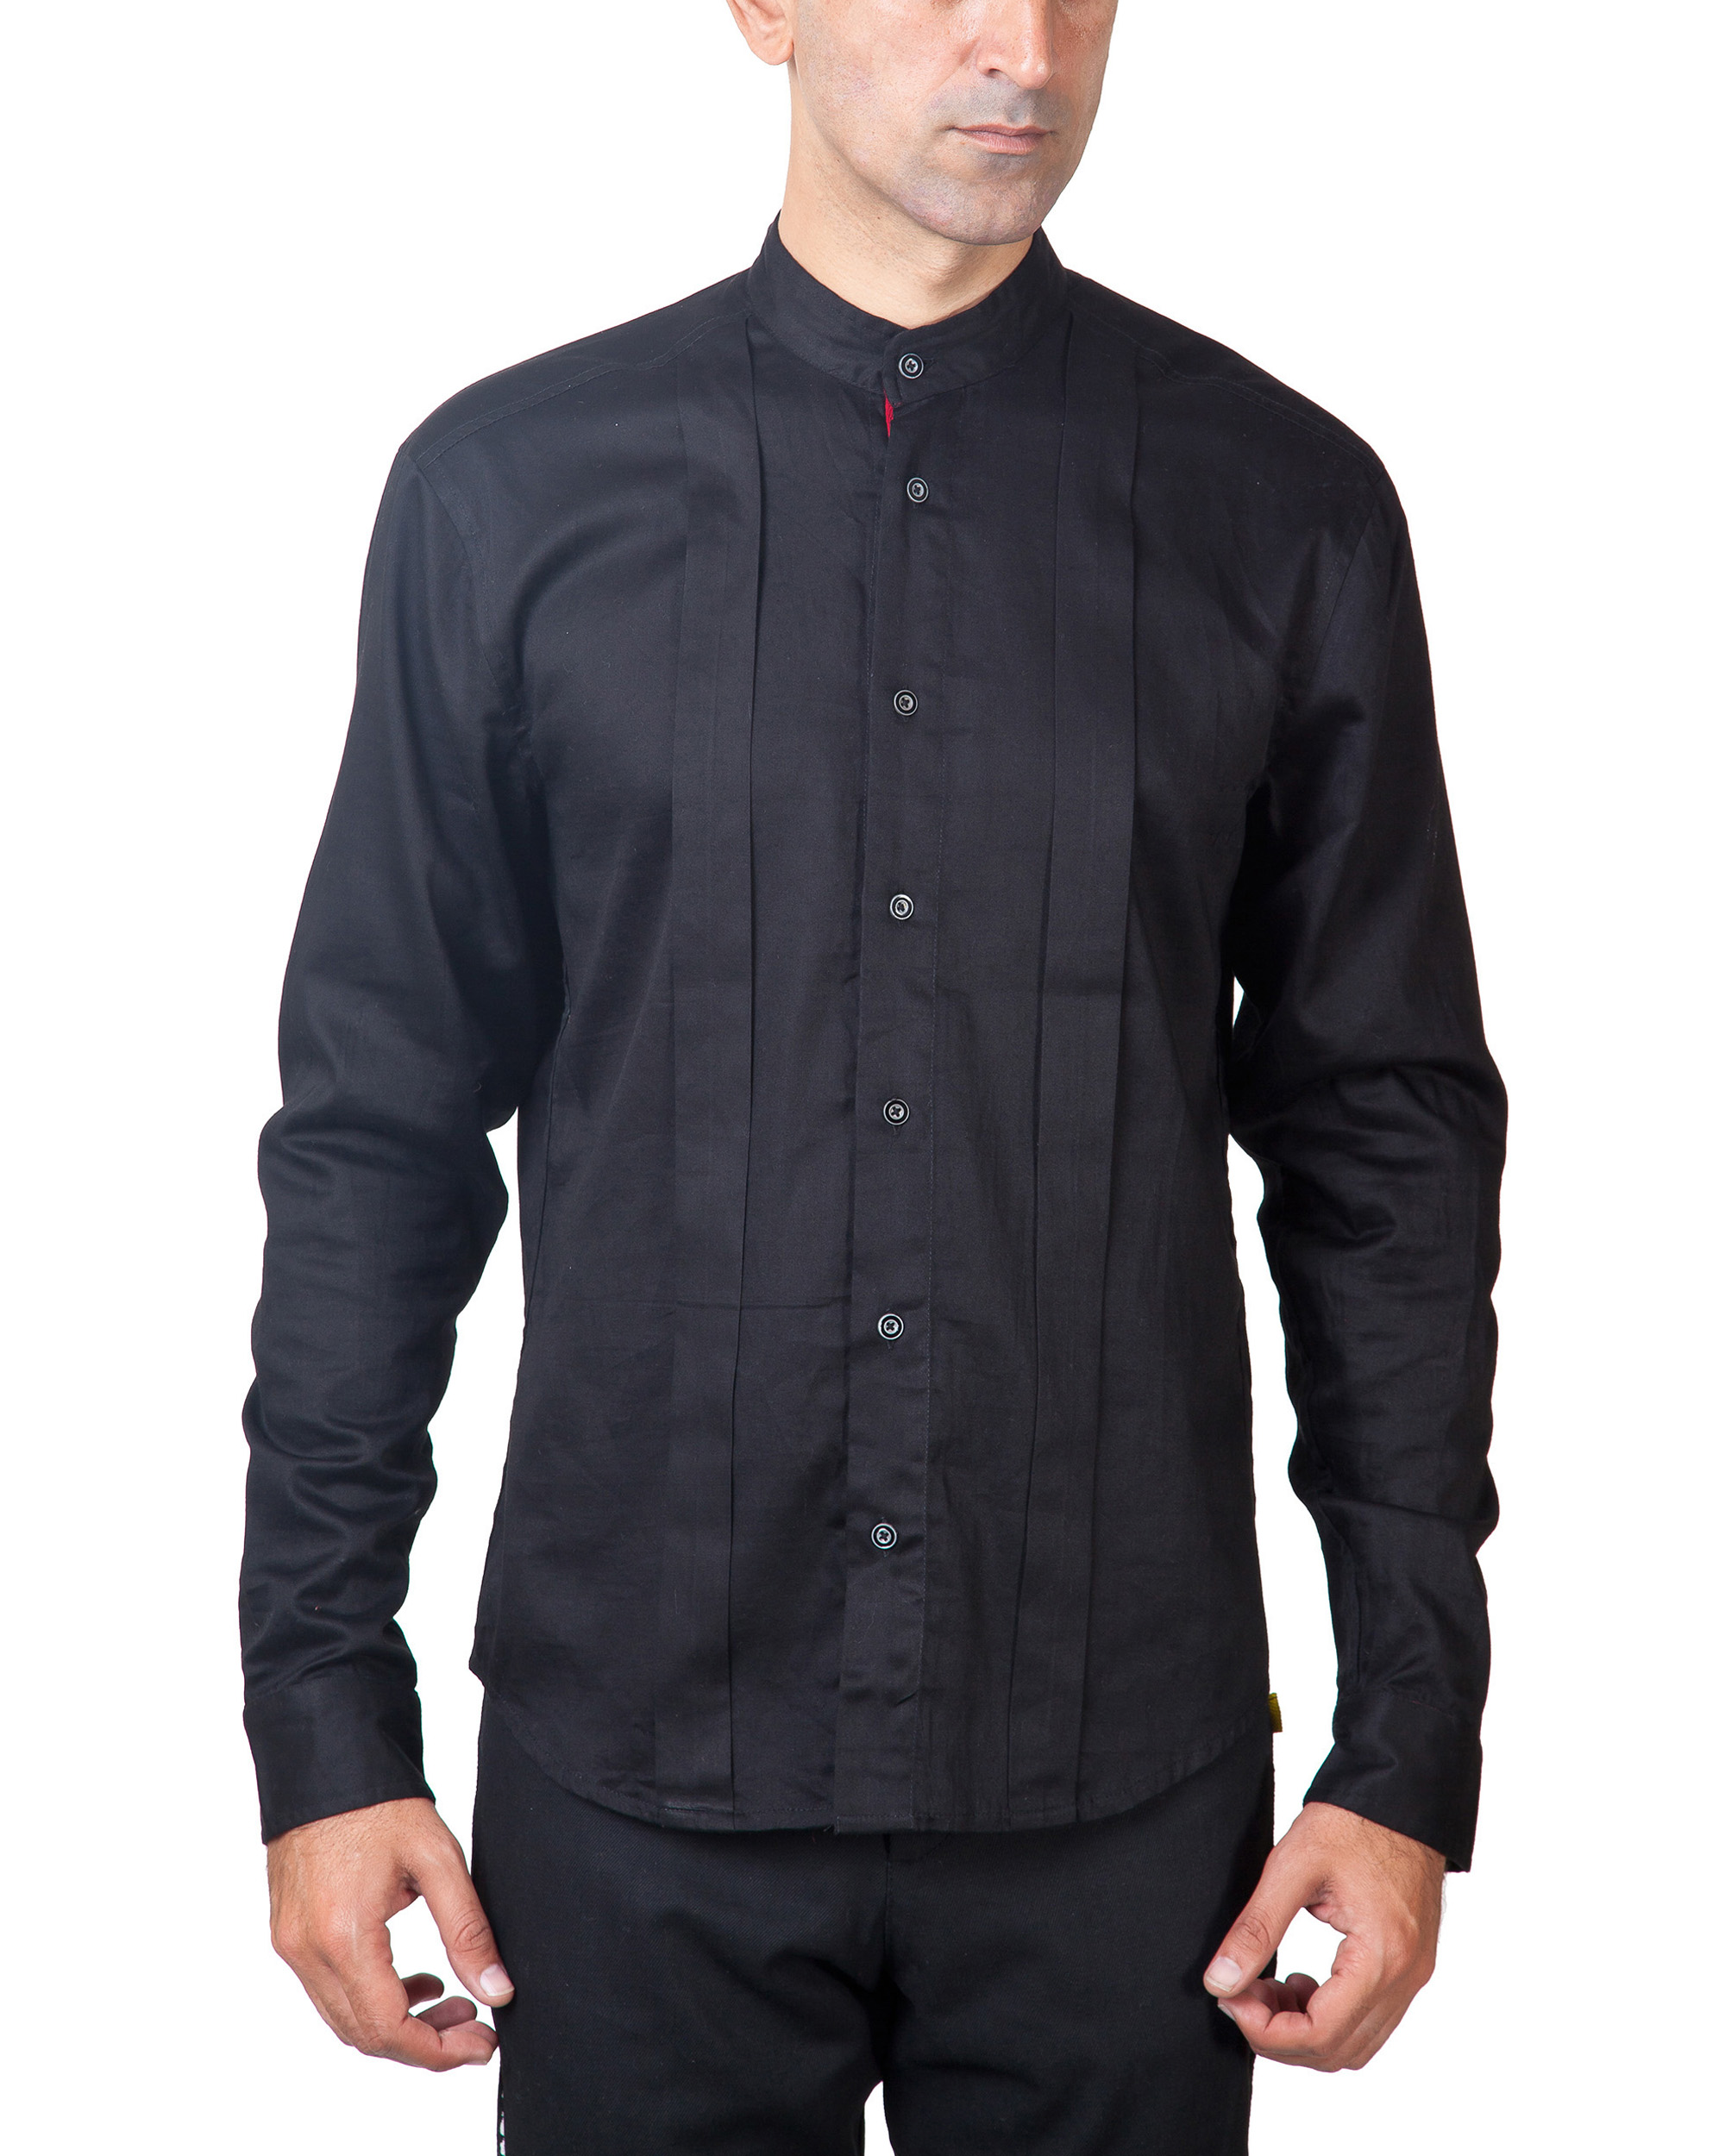 Black  pleated shirt